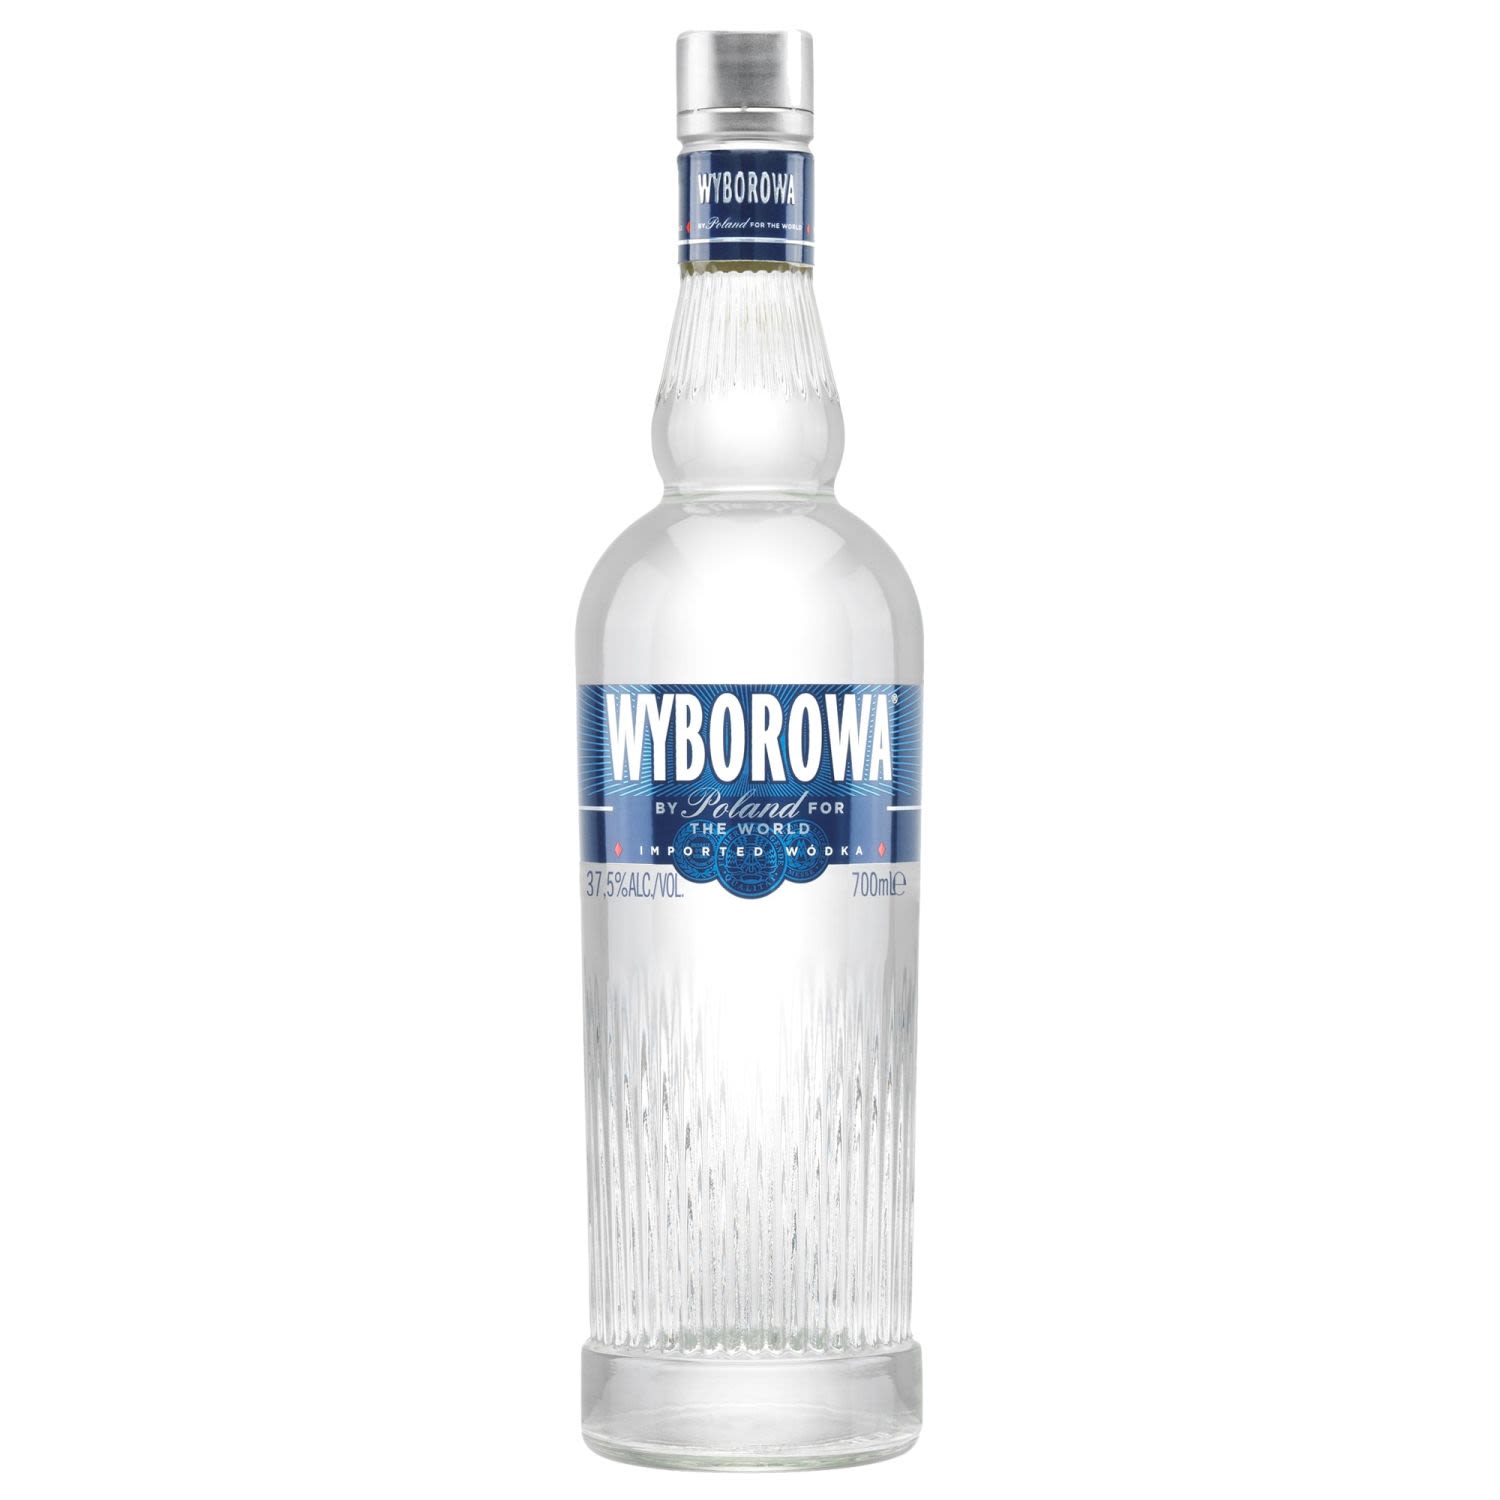 Wyborowa Vodka 700mL Bottle